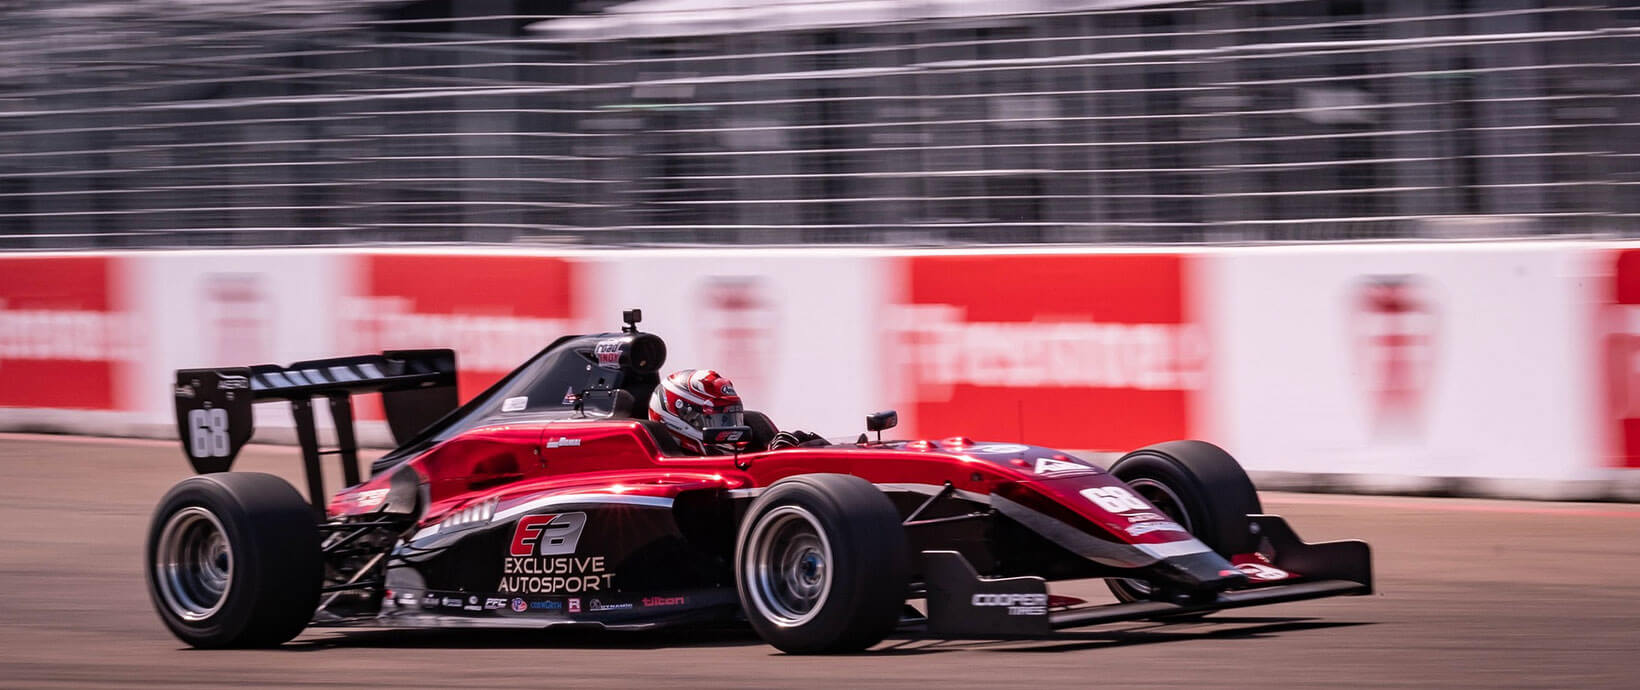 How Did Simulation Help Felix Rosenqvist Walk Away From His Crash at the Detroit Grand Prix?